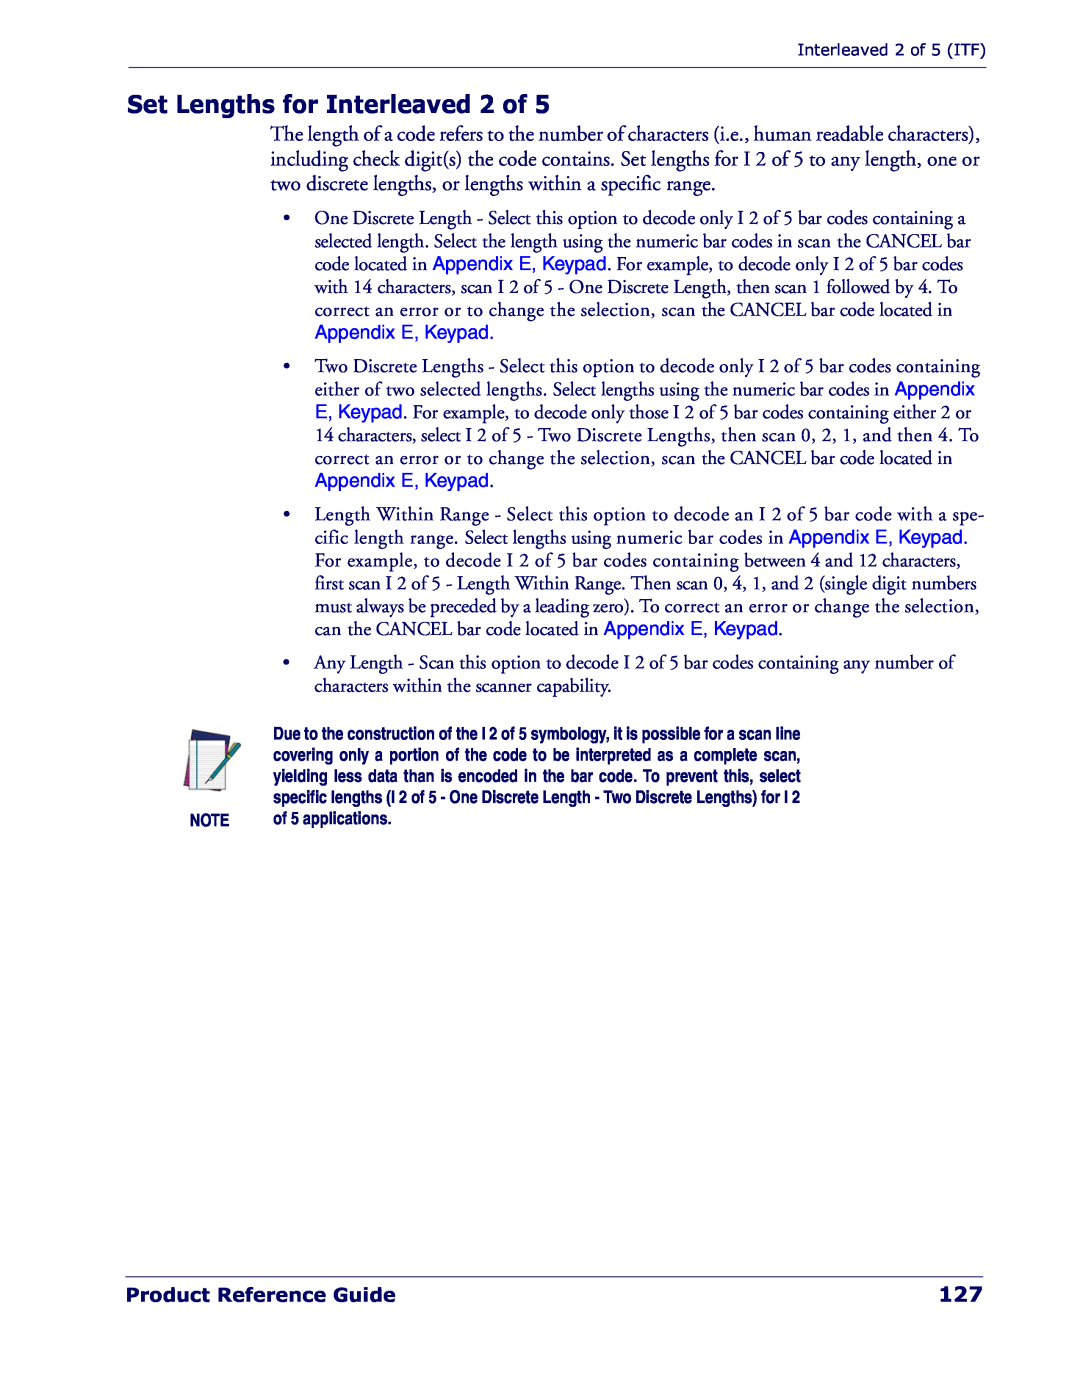 Datalogic Scanning QD 2300 manual Set Lengths for Interleaved 2 of, Appendix E, Keypad, Product Reference Guide 